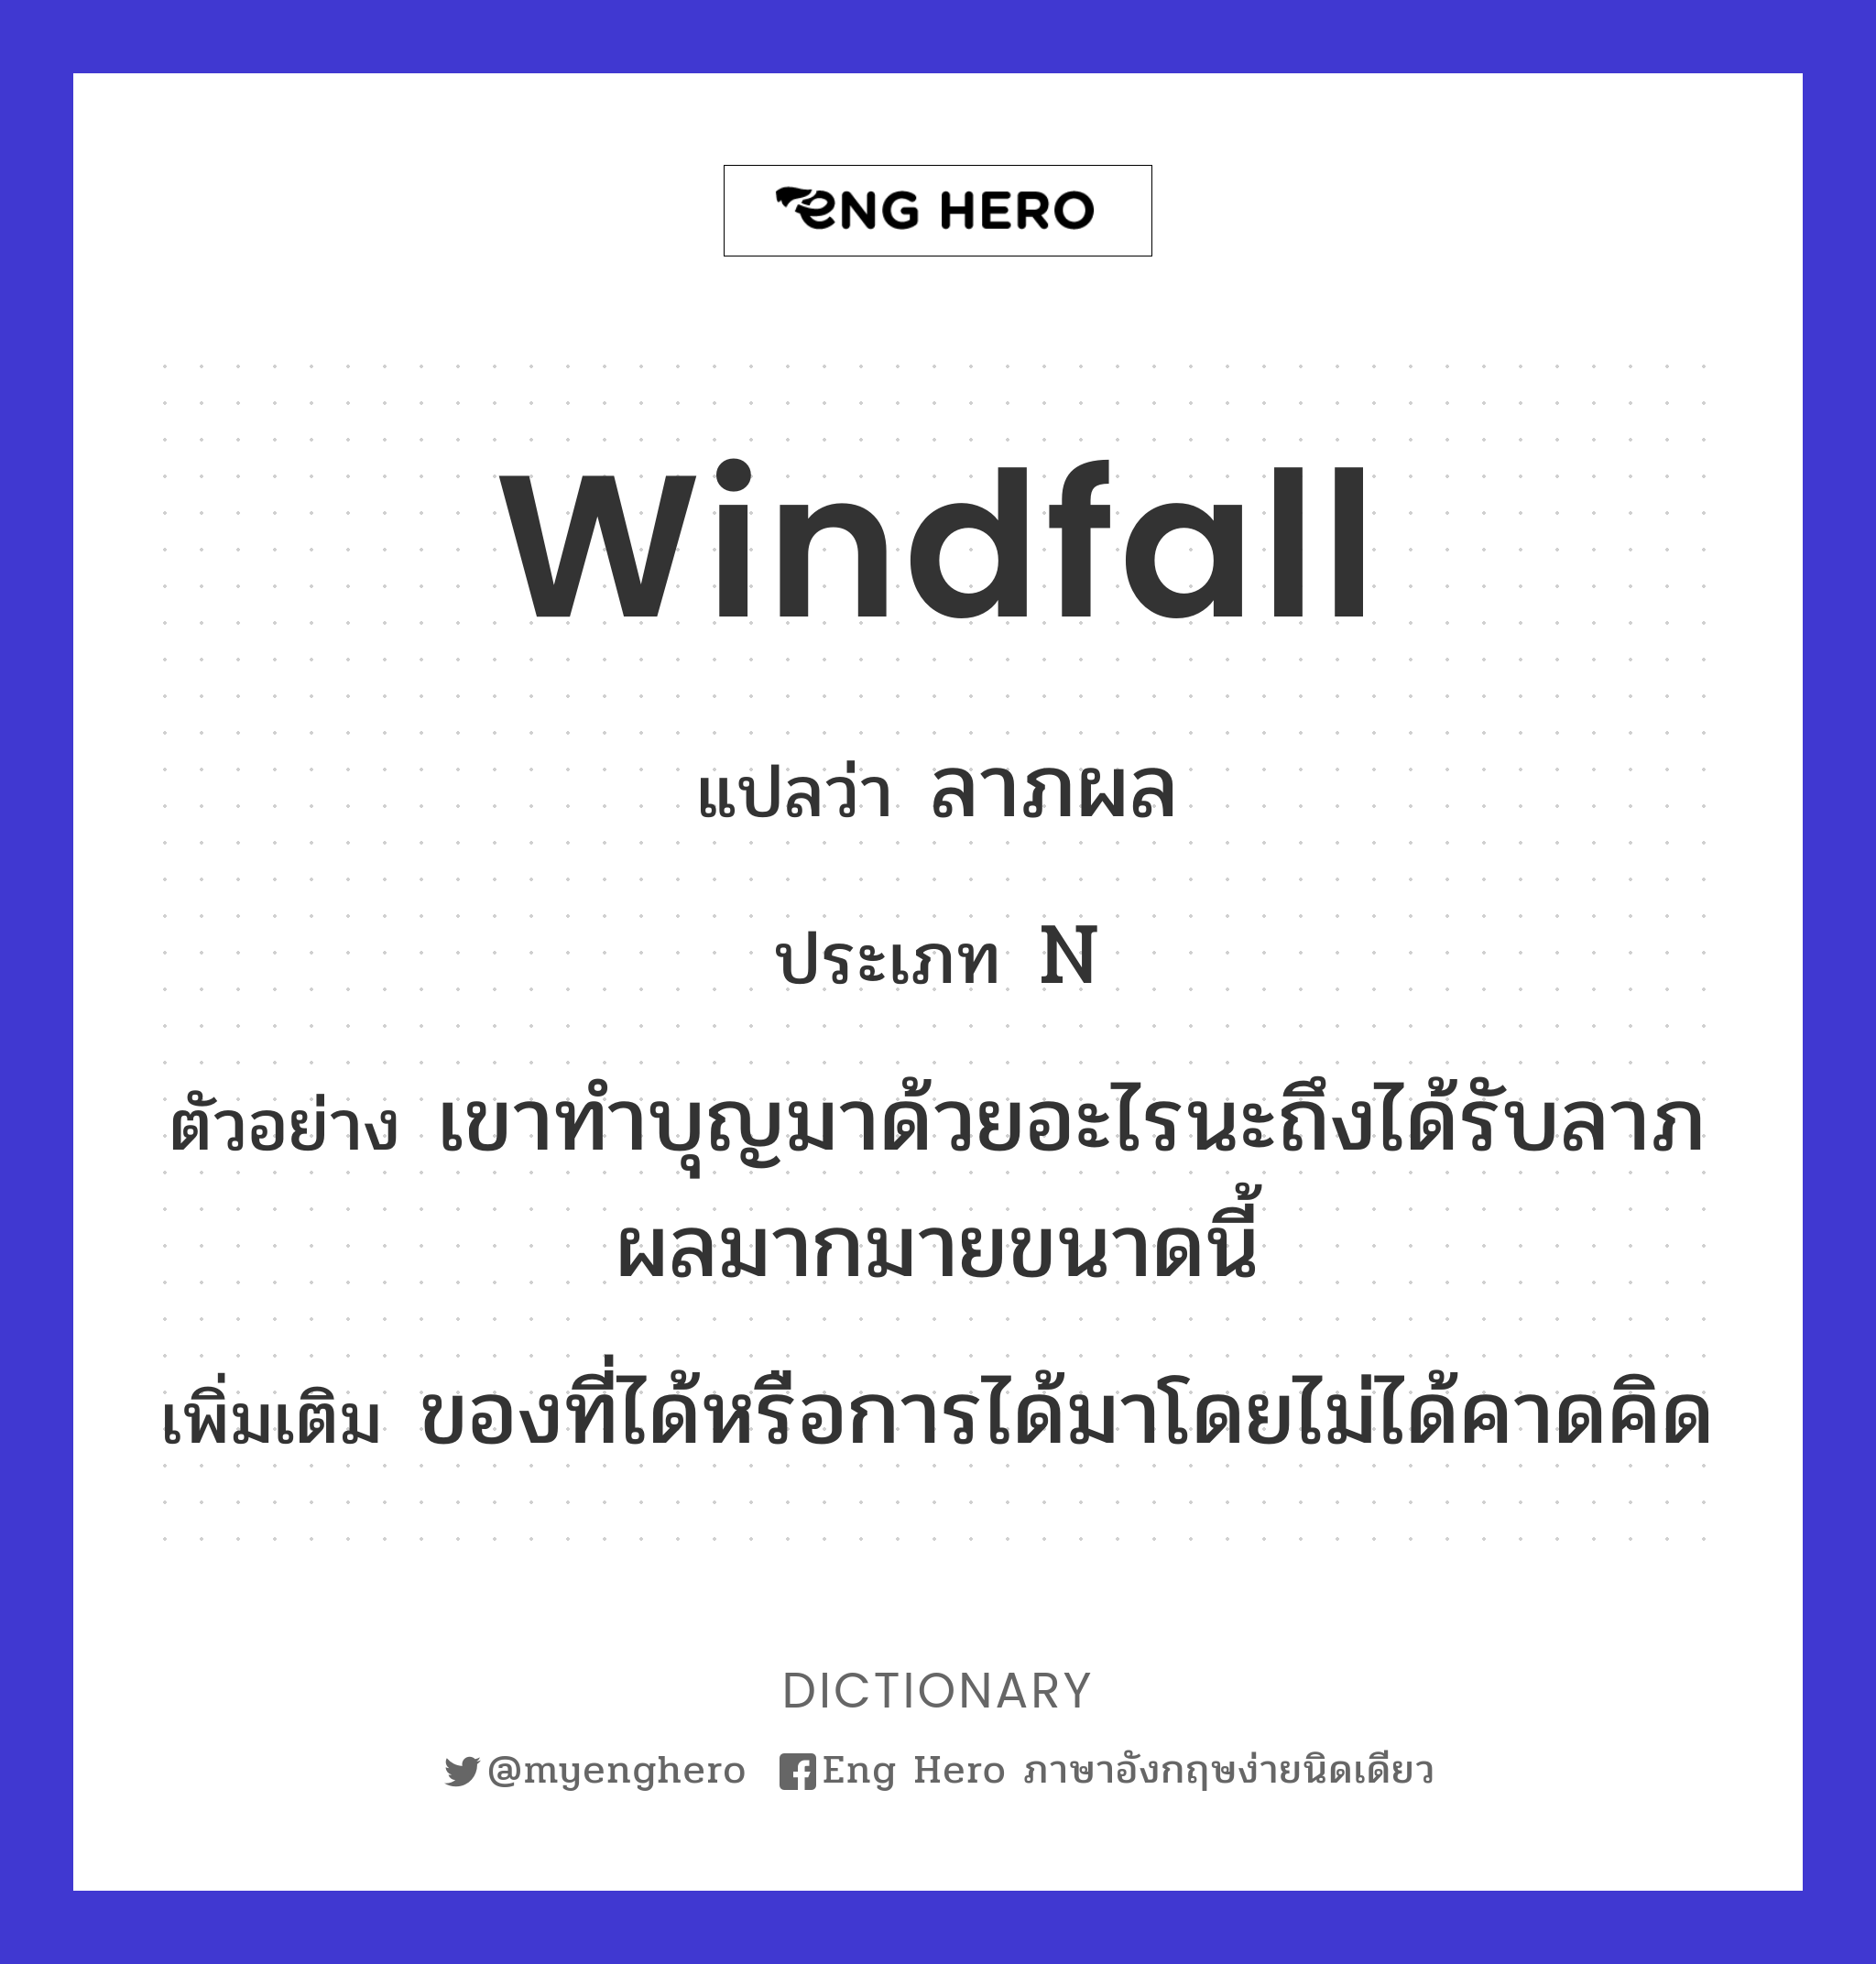 windfall